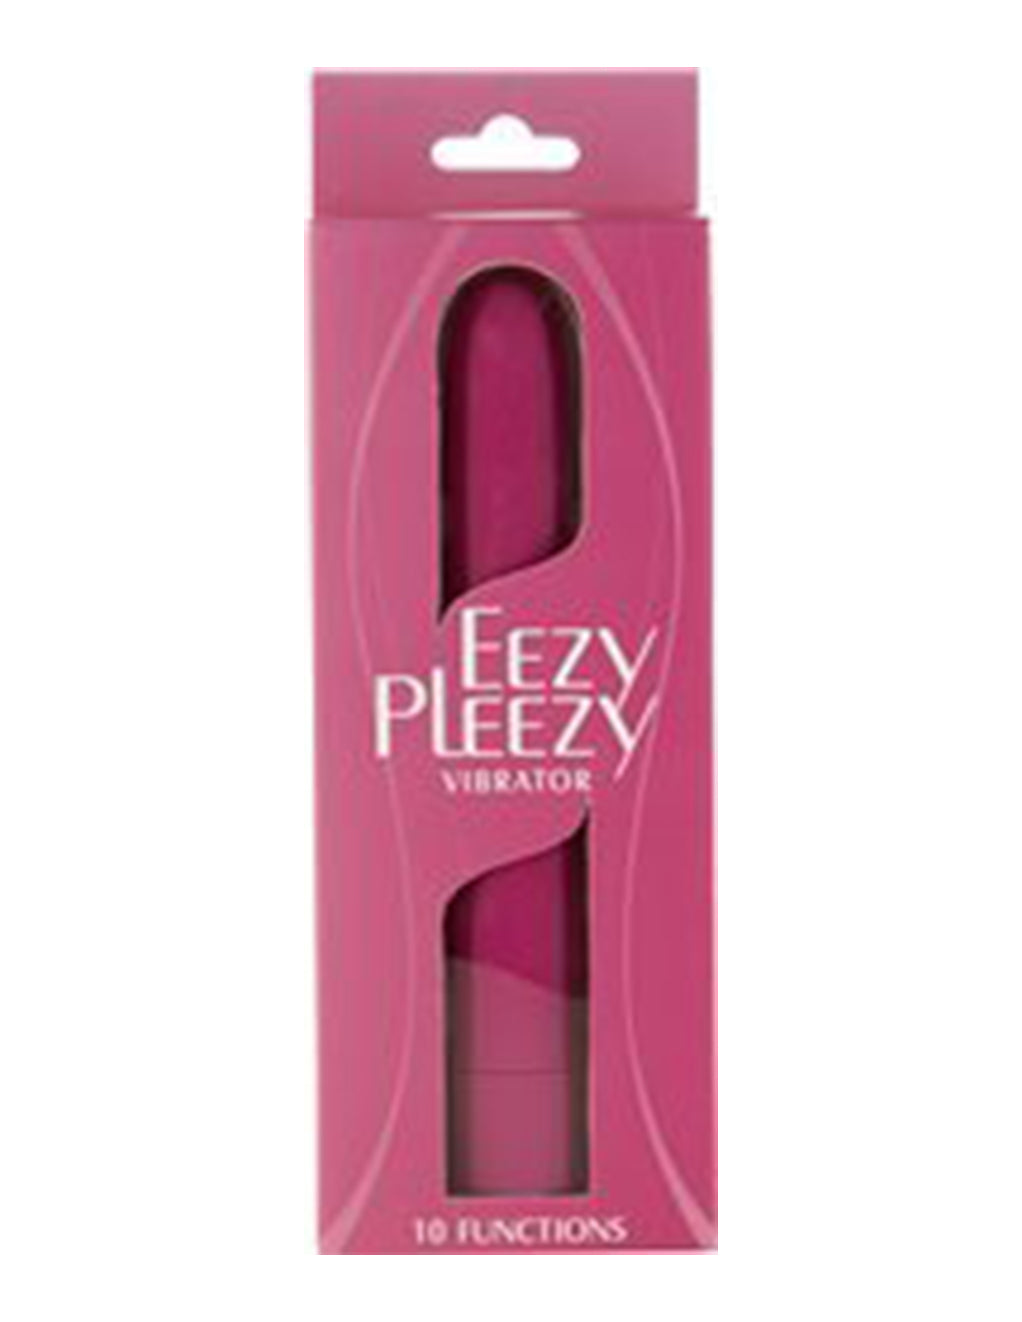 Eezy Pleezy Bullet Vibrator- Pink- Package